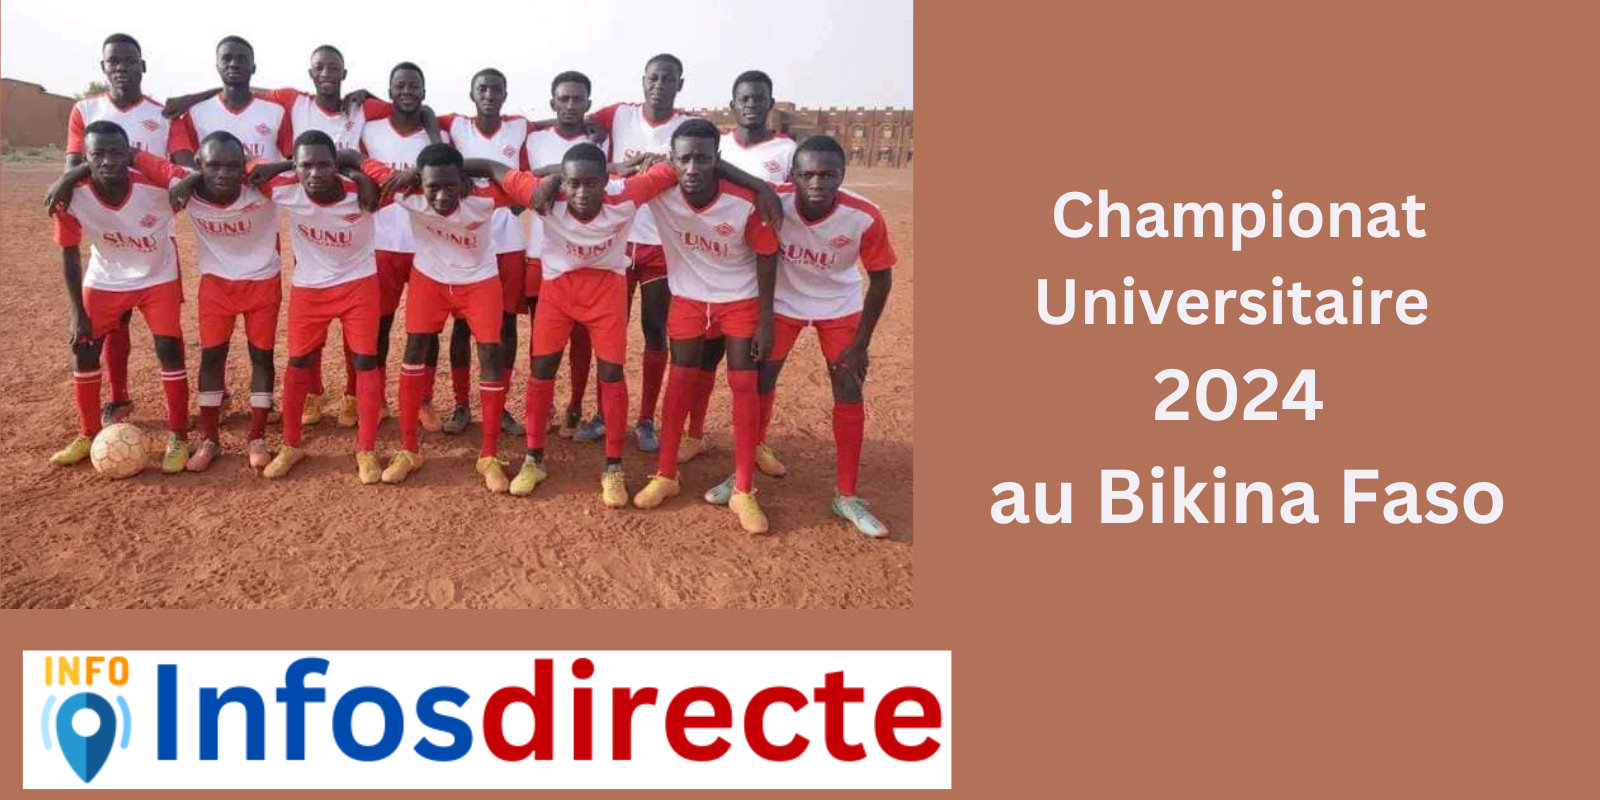 Championat Universitaire 2024 au Bikina Faso